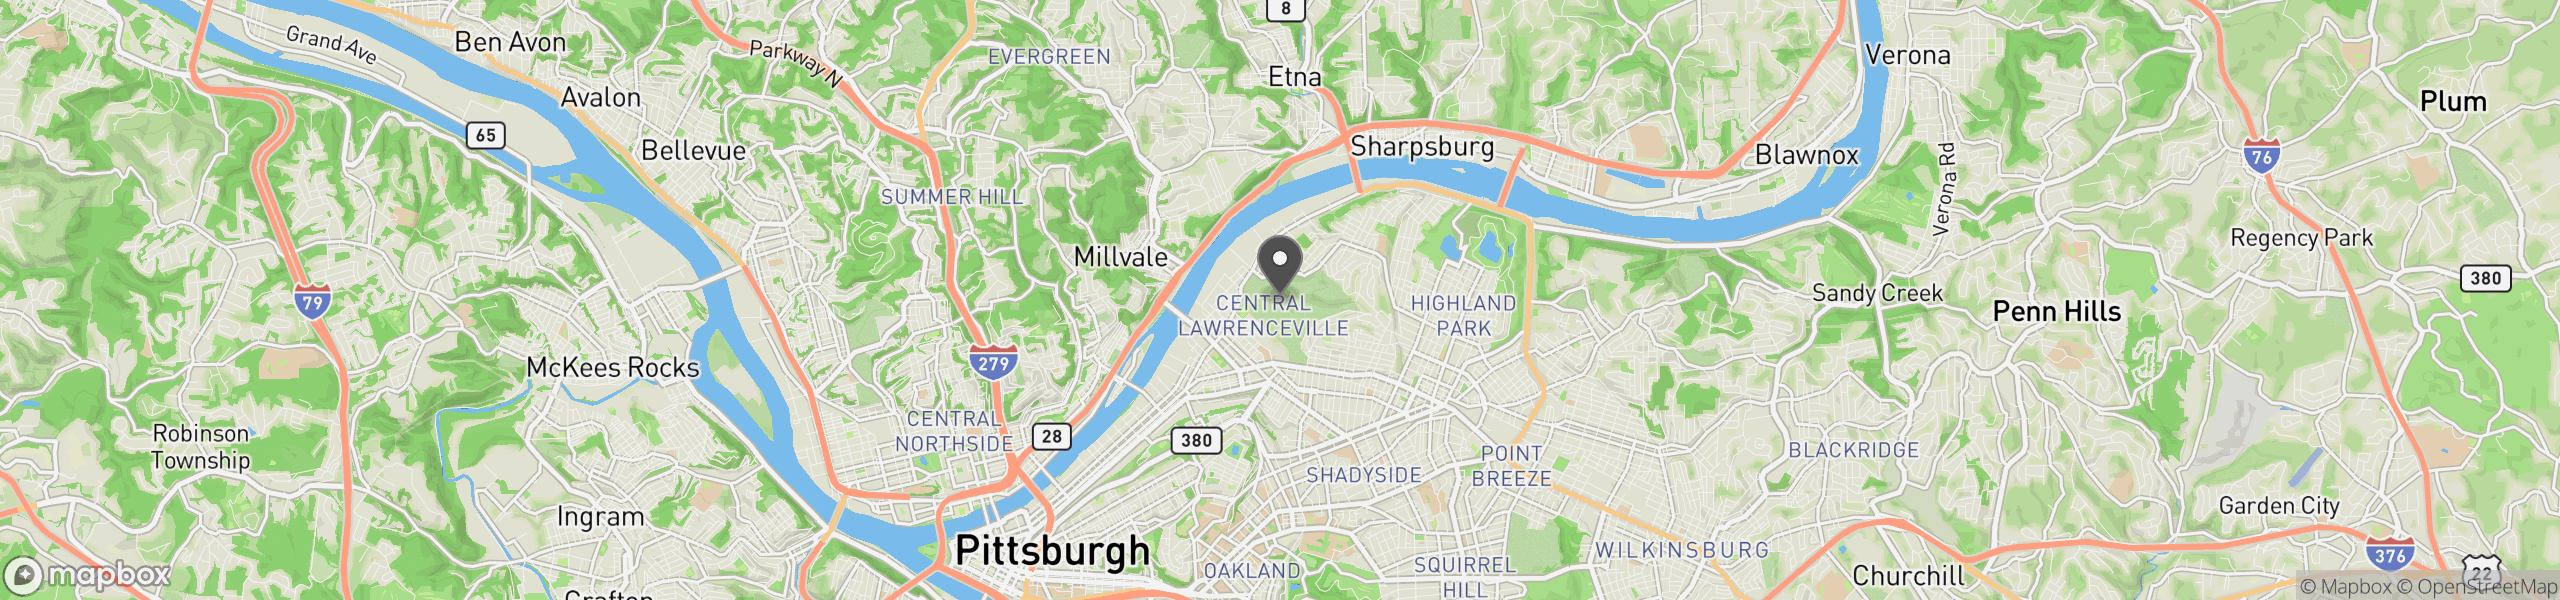 Pittsburgh, PA 15201